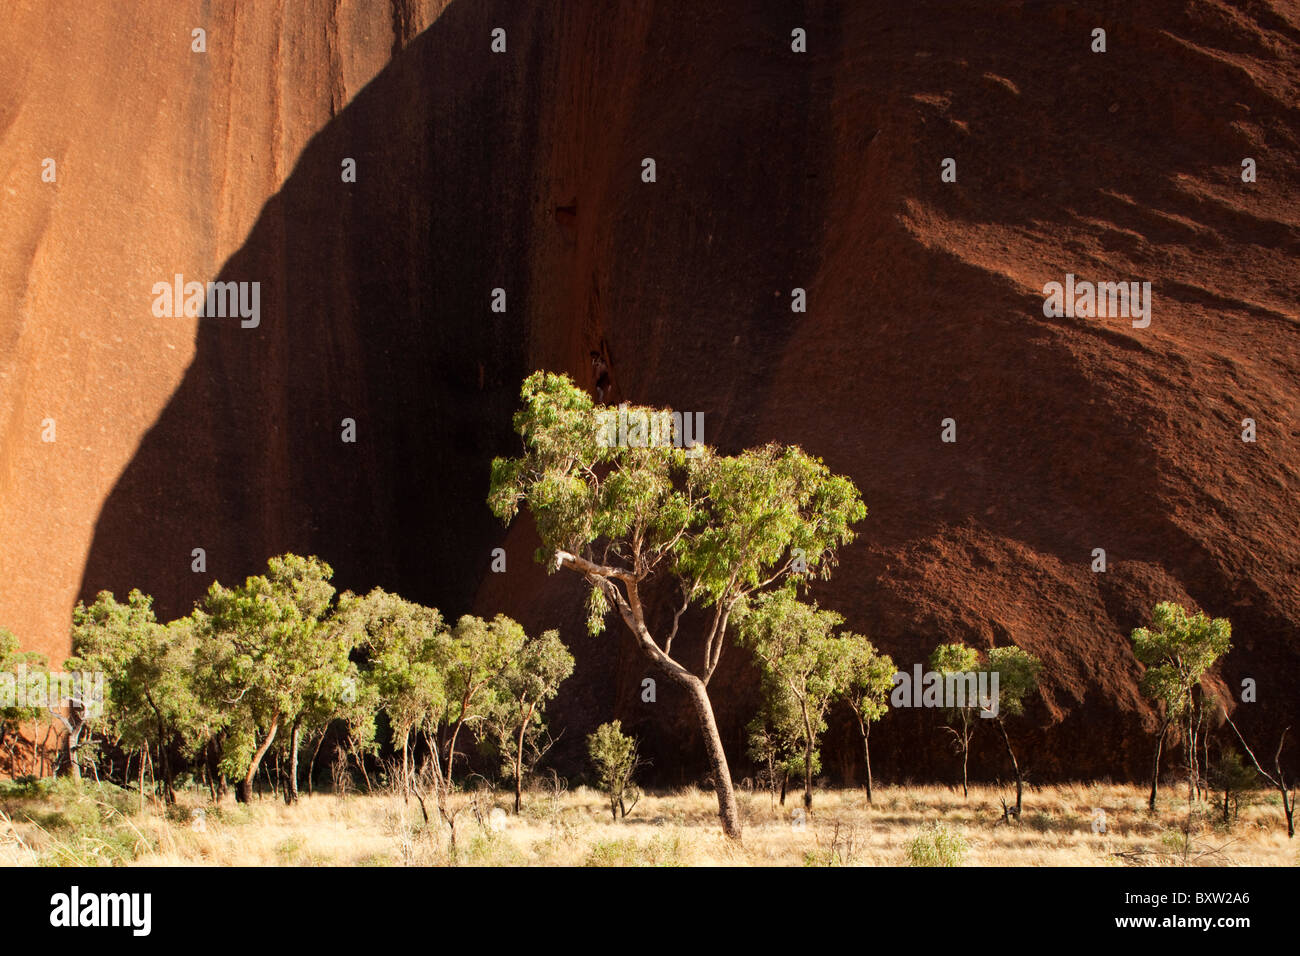 Australien-Northern Territory Uluru - Kata Tjuta National Park Wüste Eiche Bäume und Spinifex Grass an roten Felsen Ayers Stockfoto